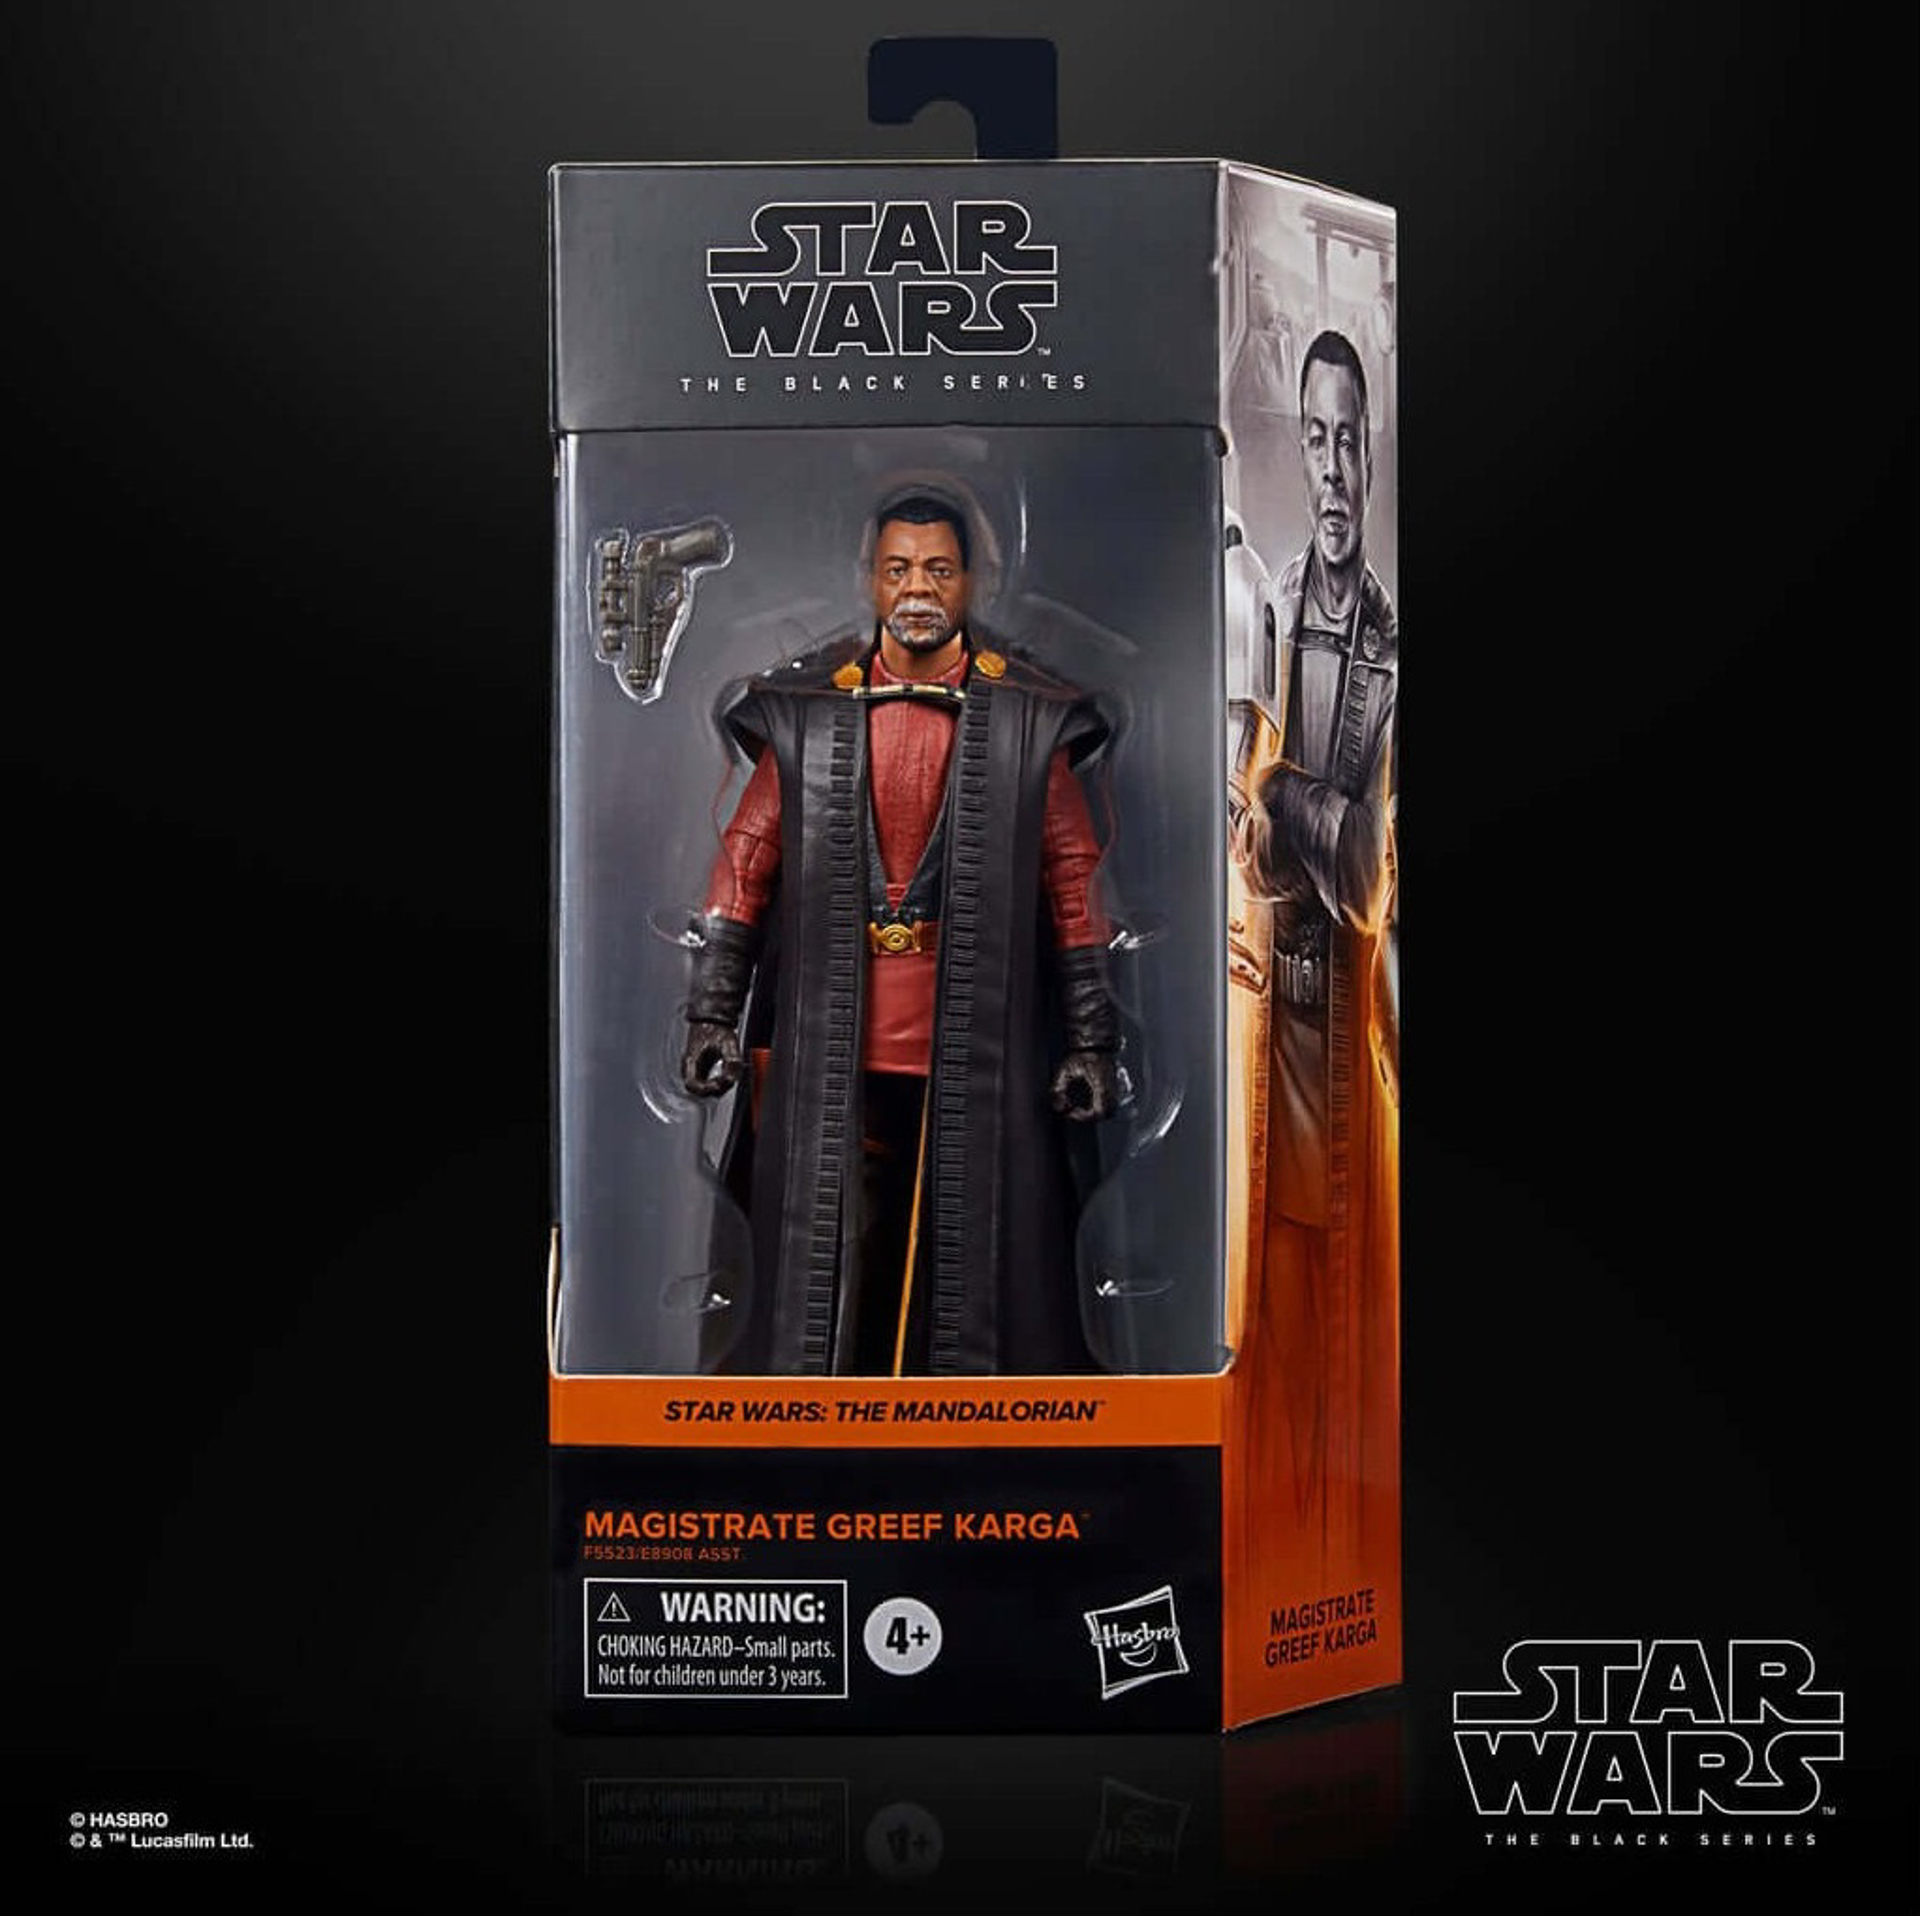 Star Wars The Black Series - Figurine d'action du magistrat Greef Karga 15cm